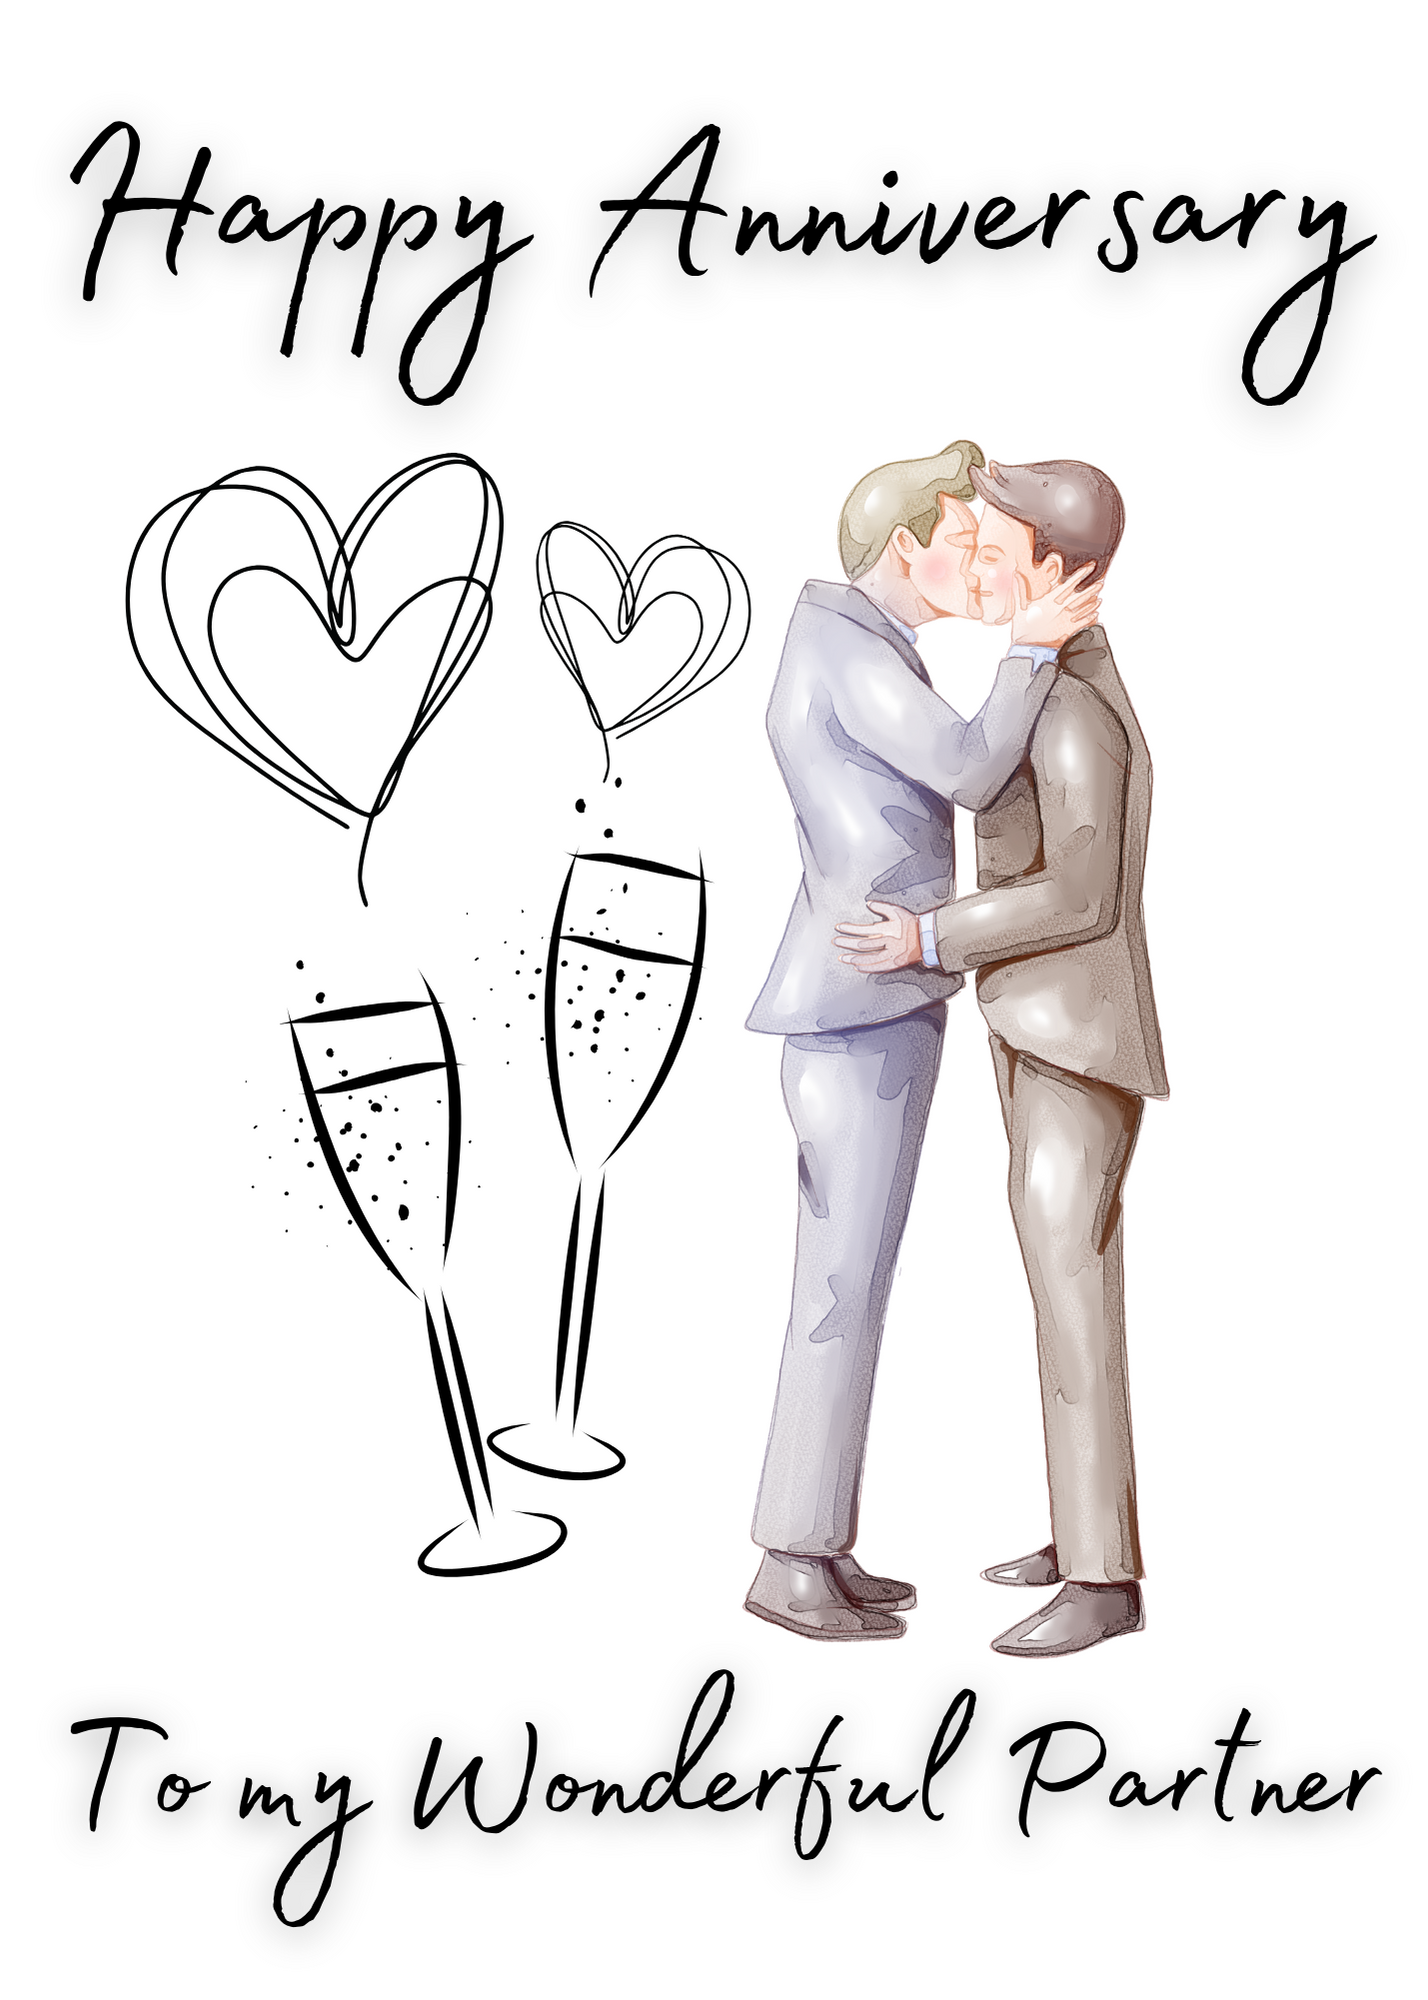 Gay Anniversary Card for Partner | LGBT+ Happy Anniversary Greetings Card for Wonderful Partner